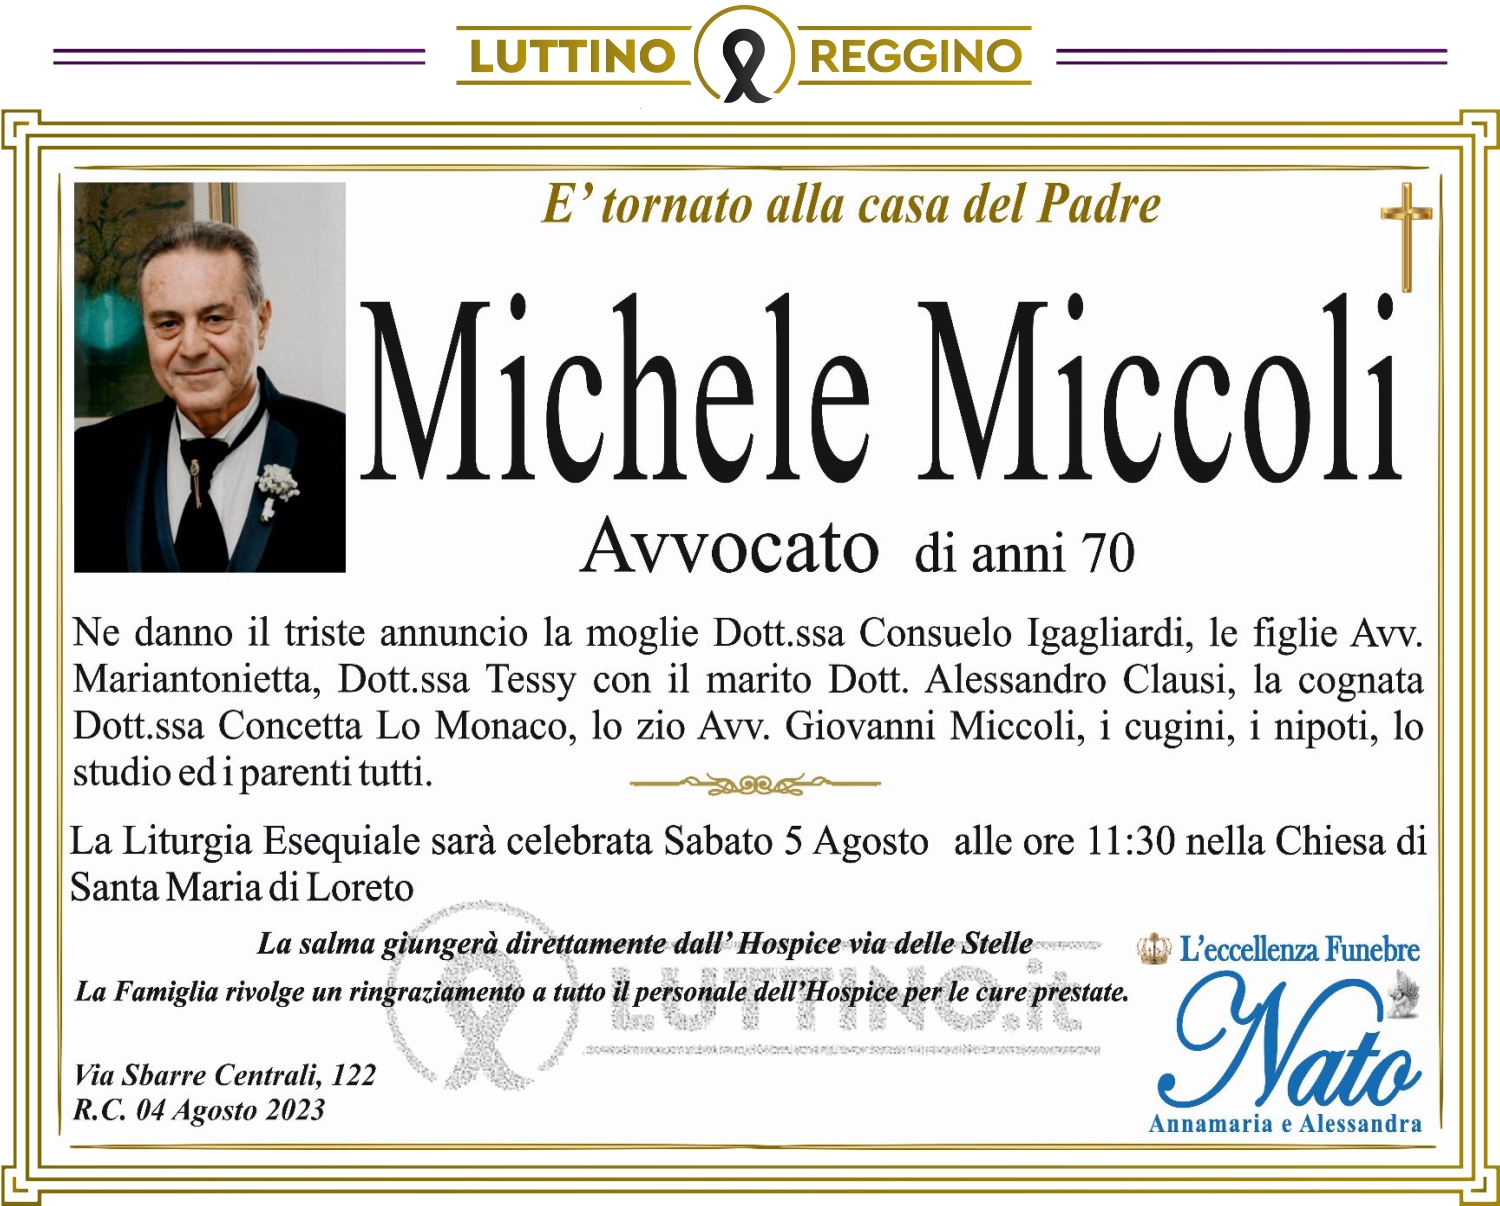 Michele Miccoli